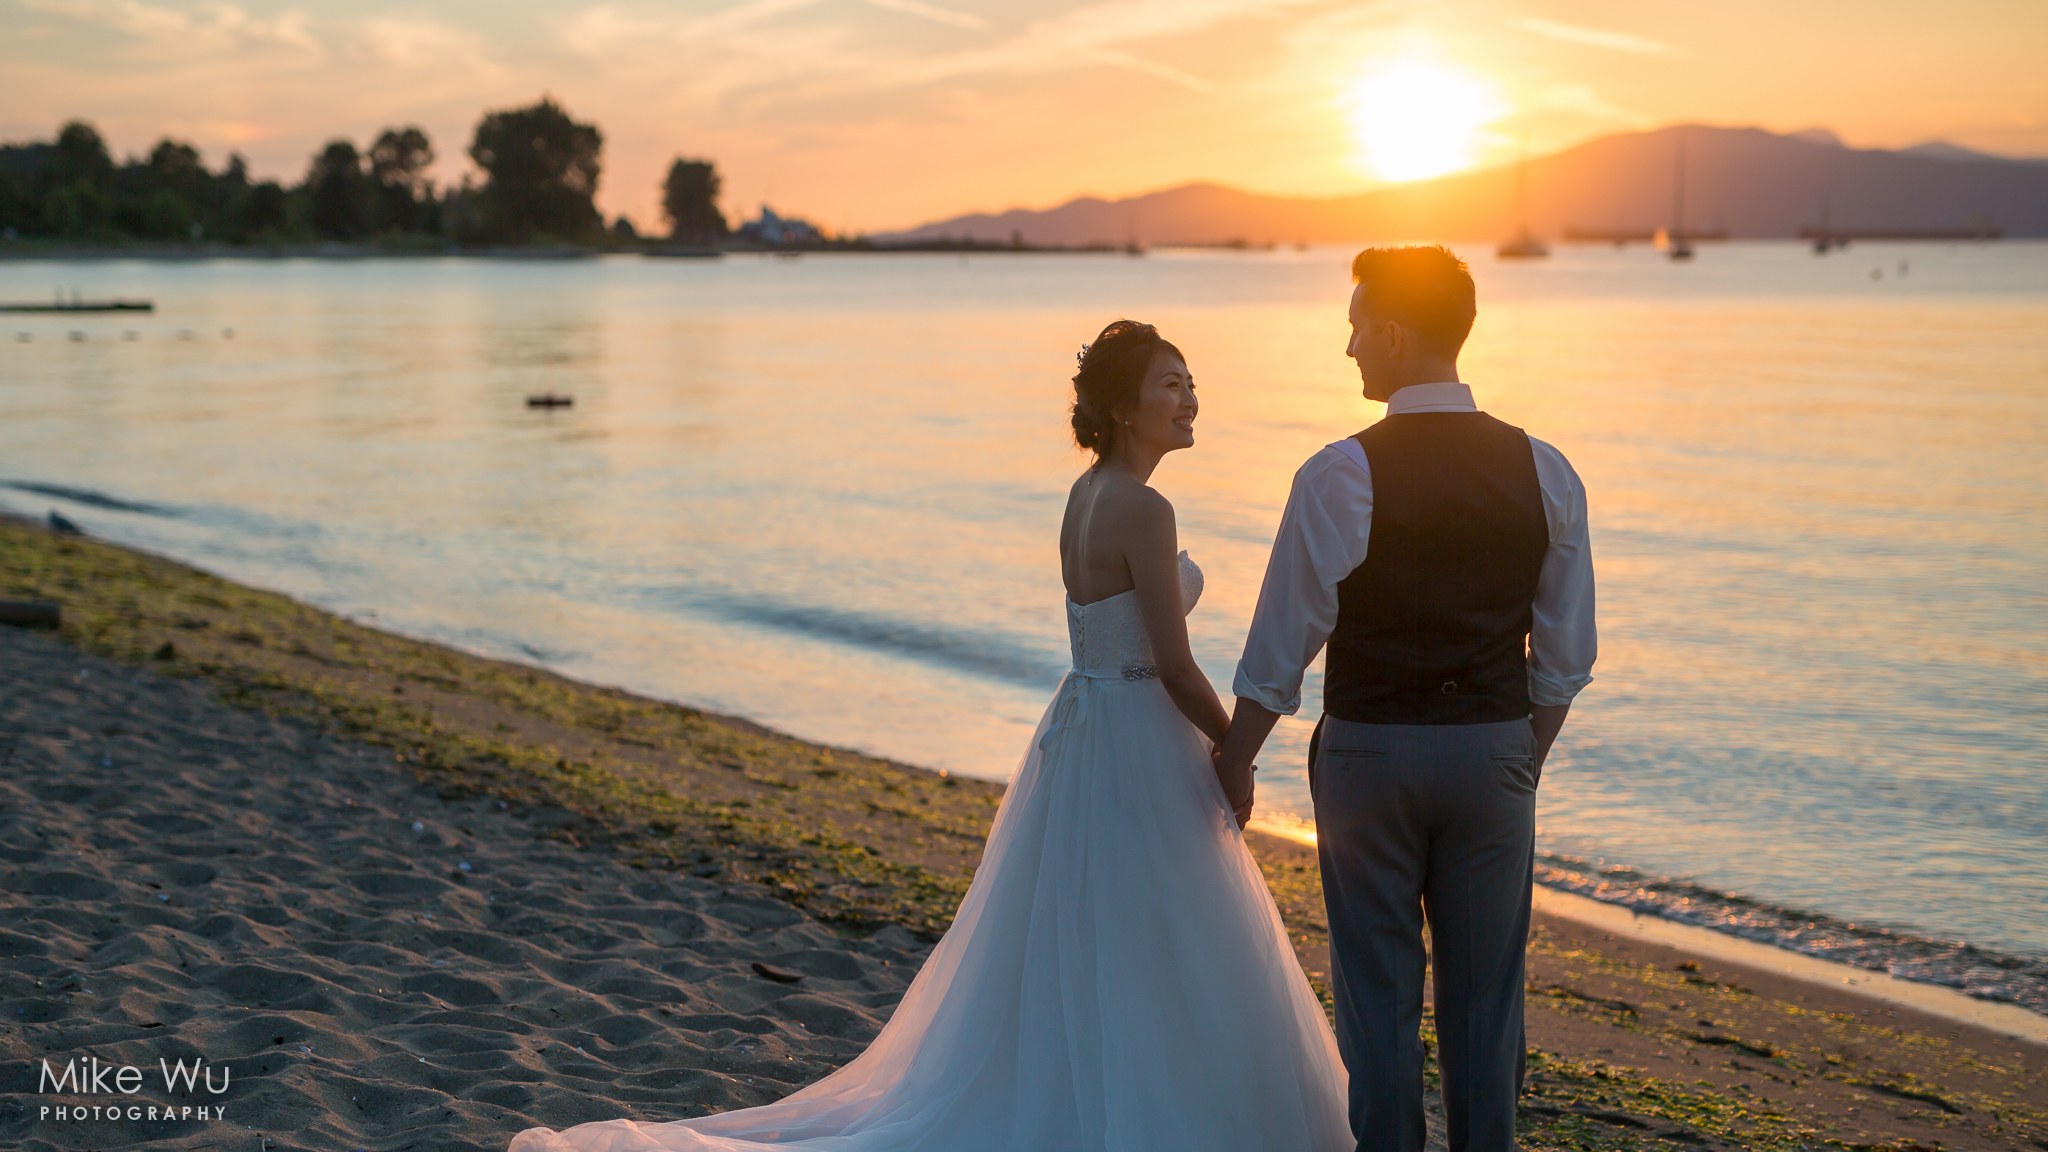 Vancouver, Wedding, sunset, Brock House, beach, sand, water, sun, golden hour, waves, love, smile, bride, groom, warm, summer